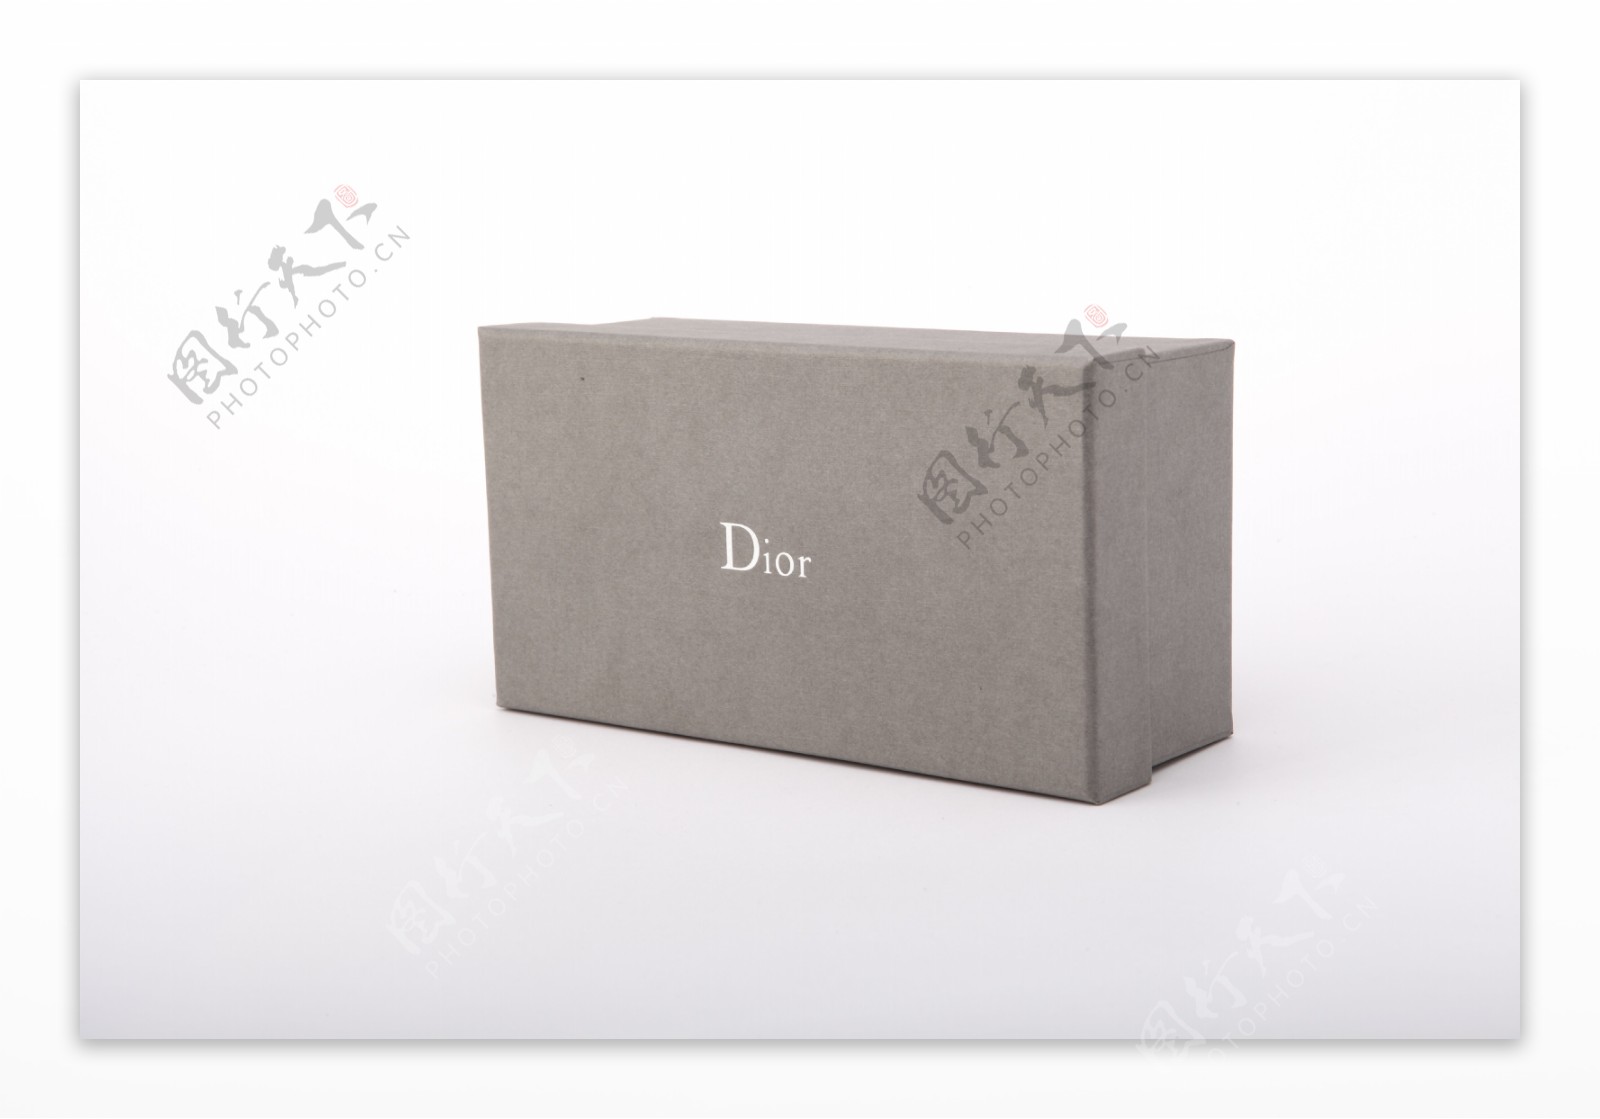 dior盒子图片